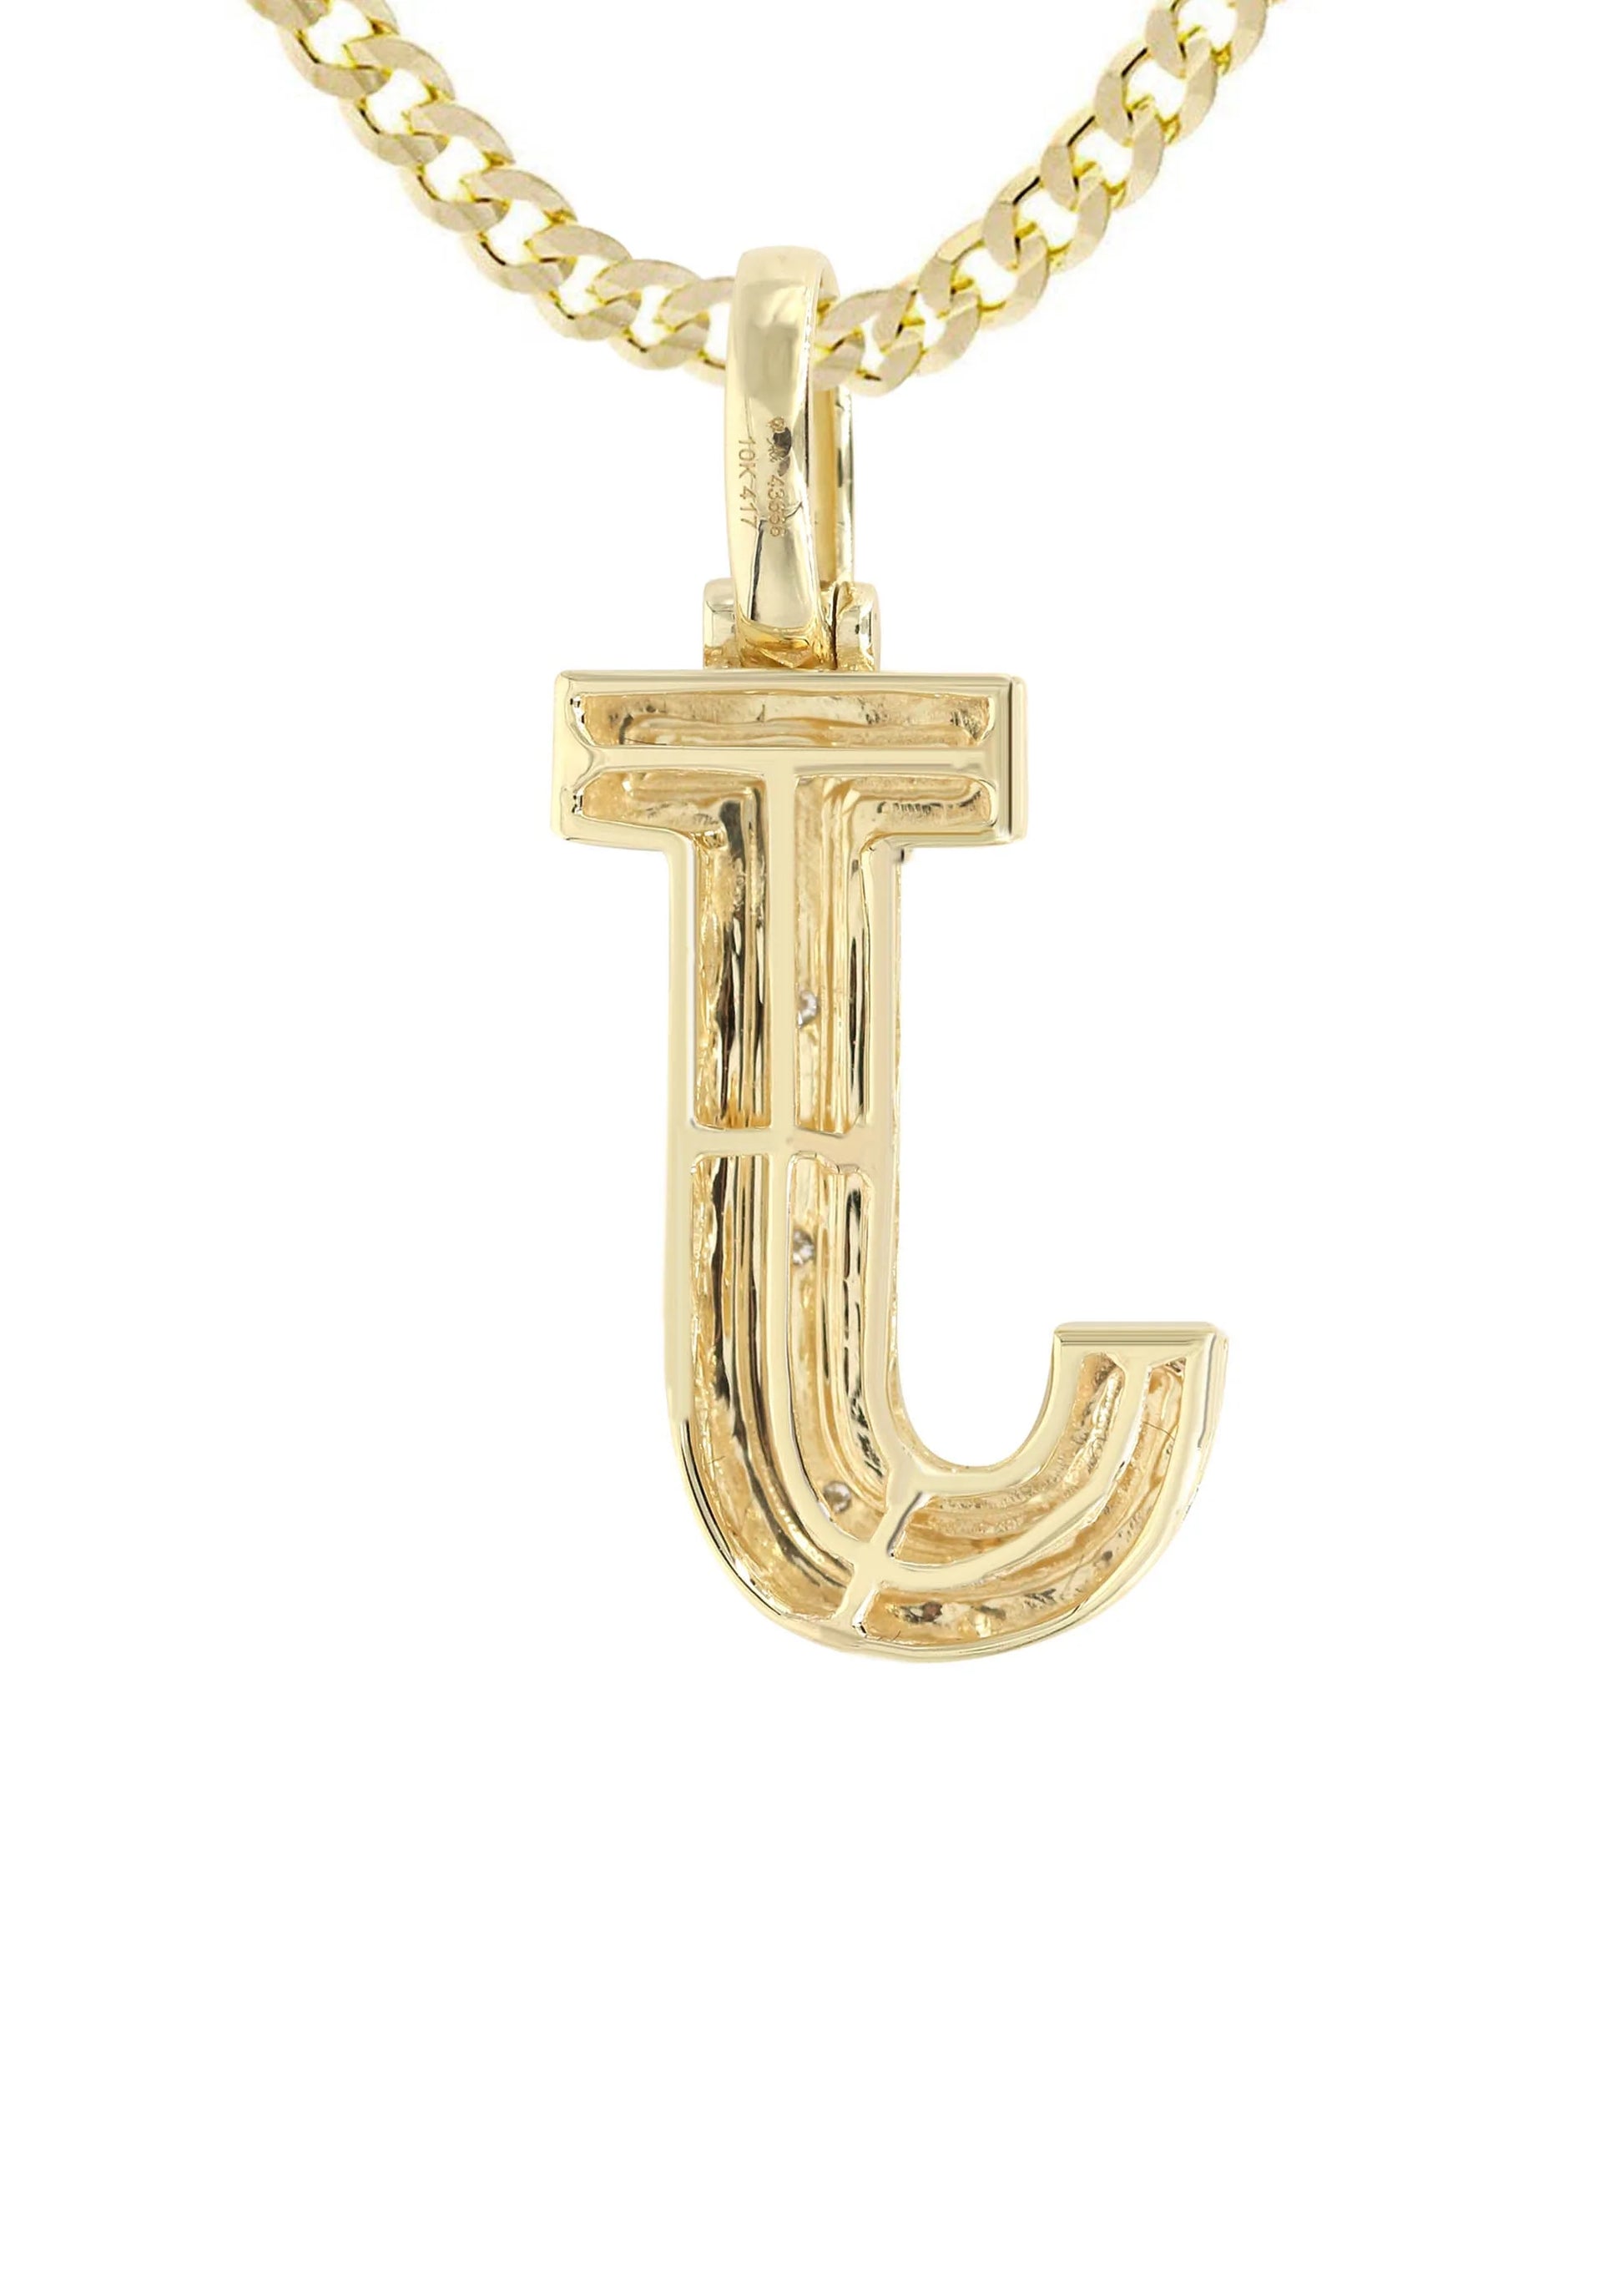 10k Yellow Gold Diamond Pendant Letter "J"